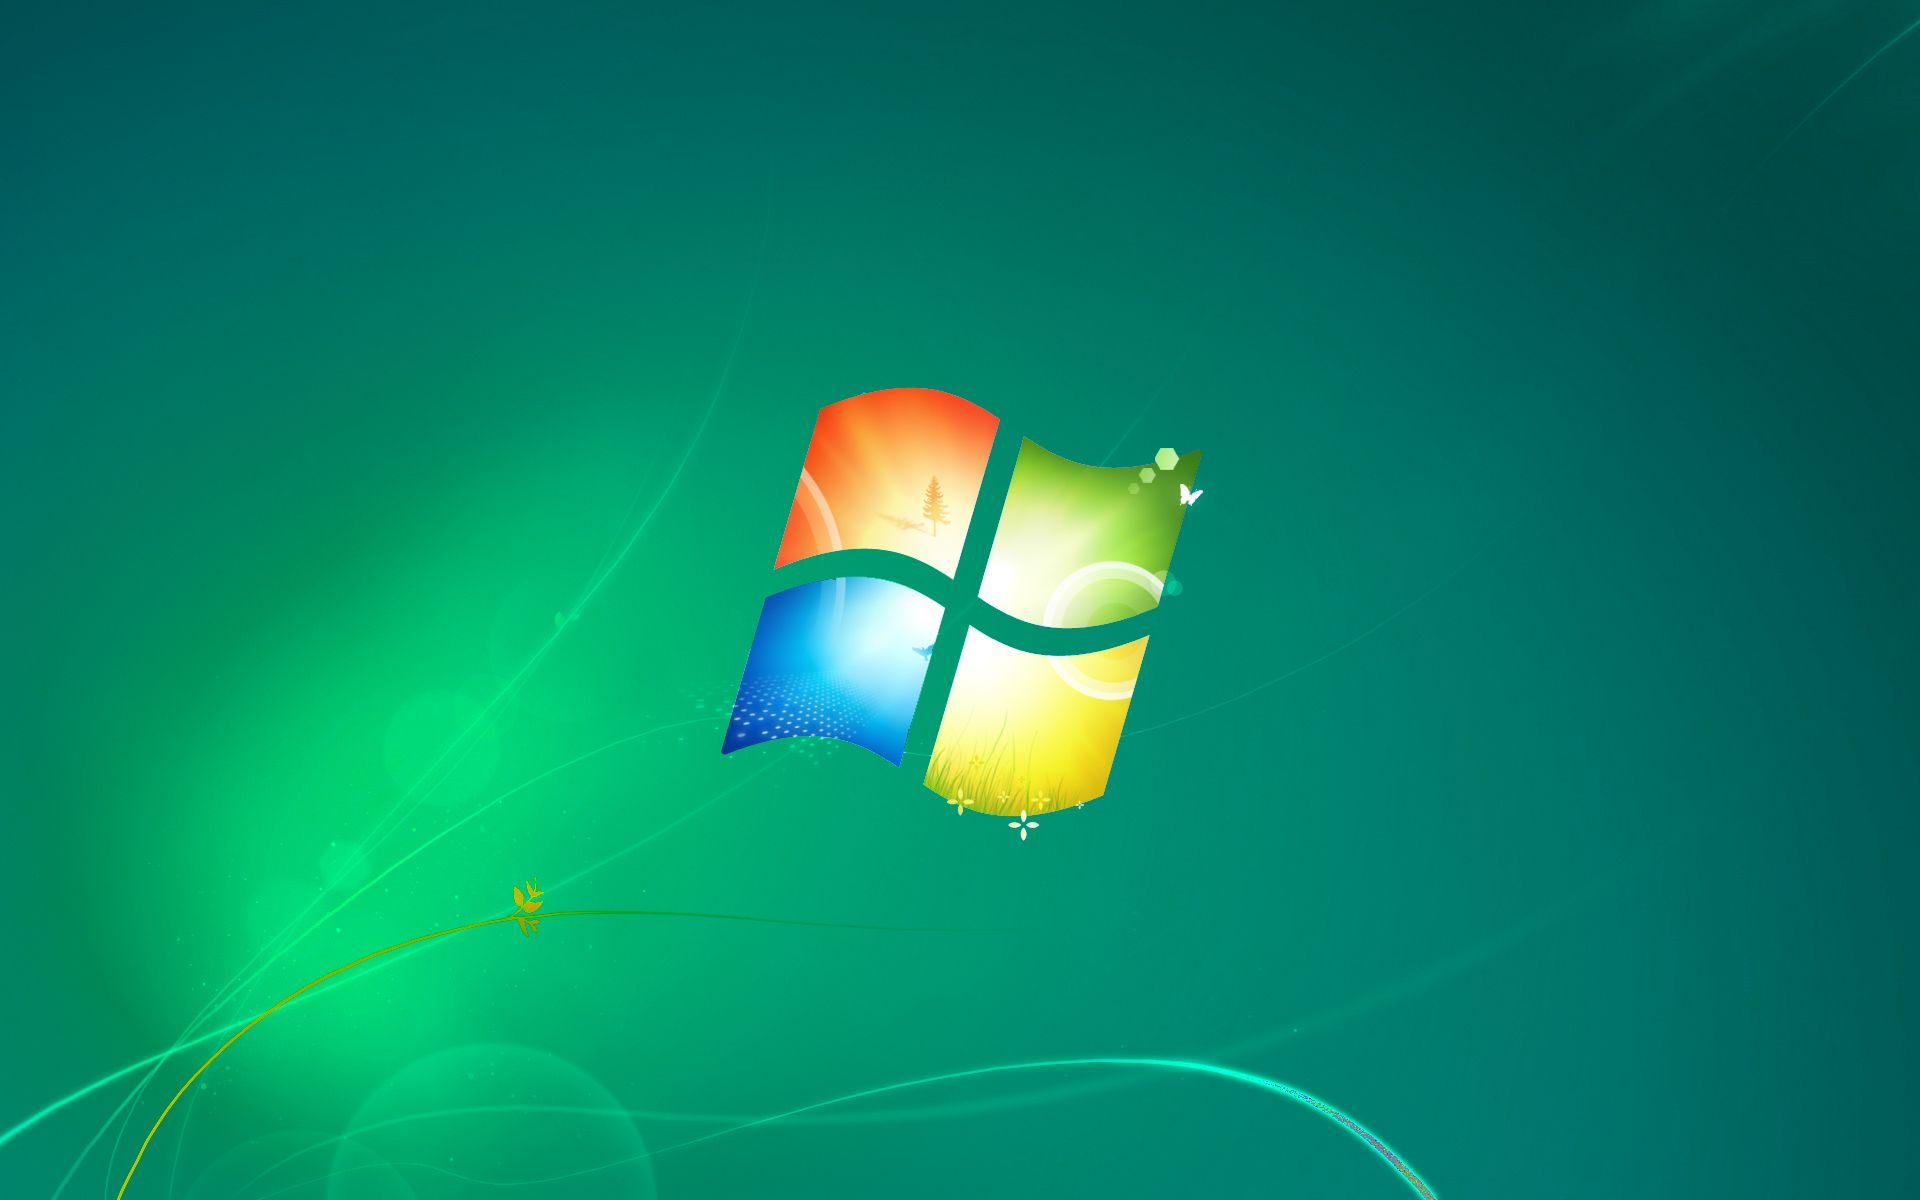 Windows 7 Default Wallpaper Green Version by dominichulme